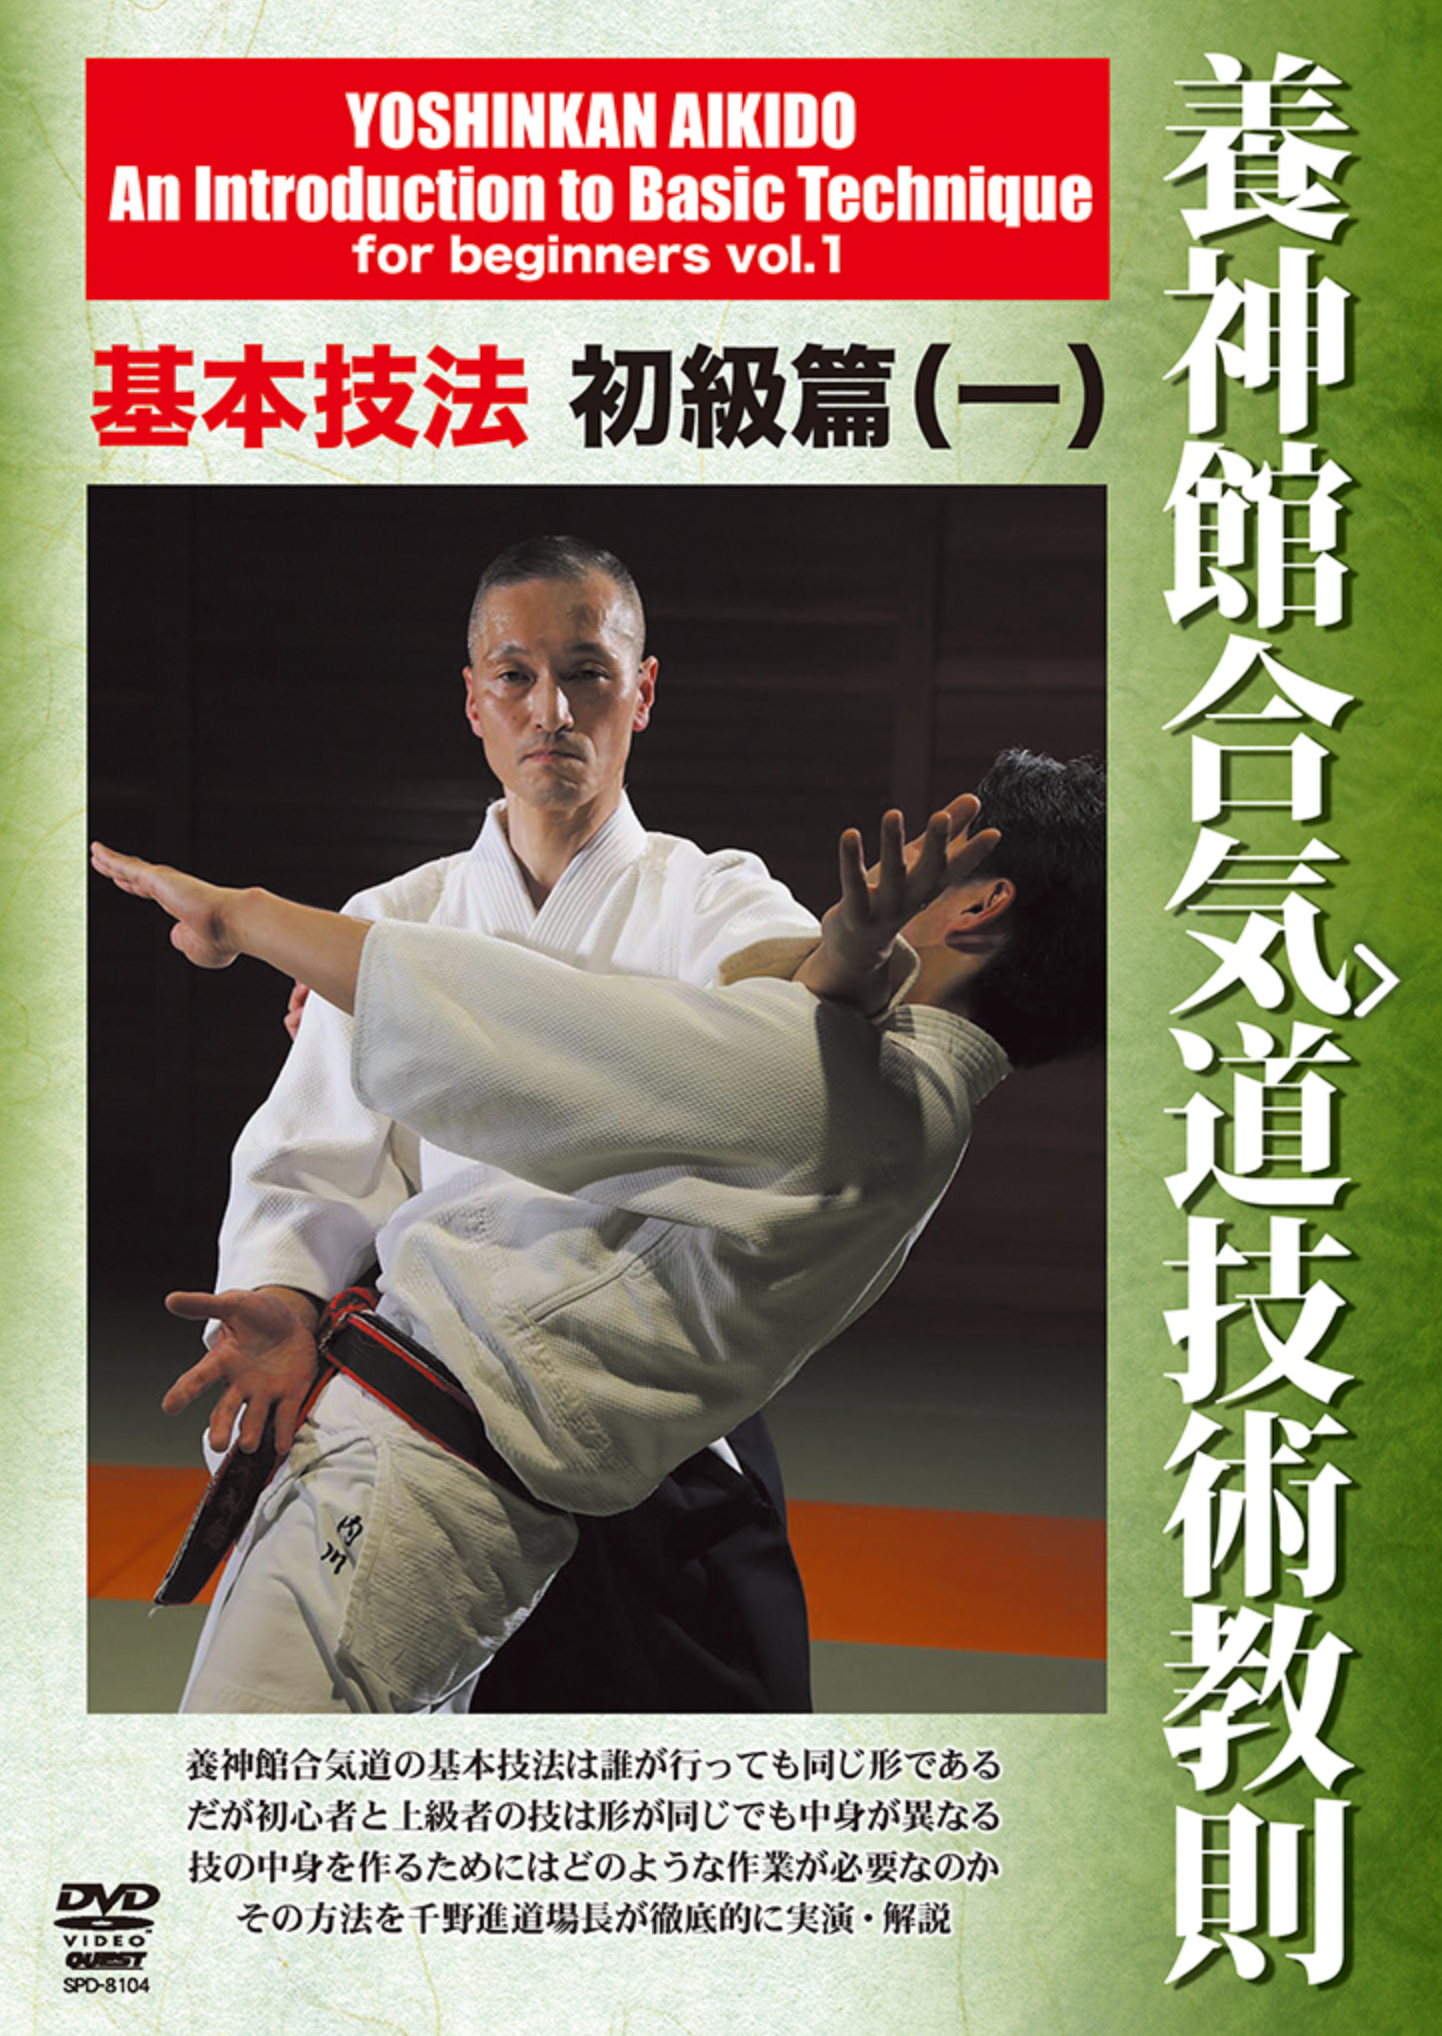 Yoshinkan Aikido Intro to Basic Techniques DVD 1 with Sususmu Chino - Budovideos Inc